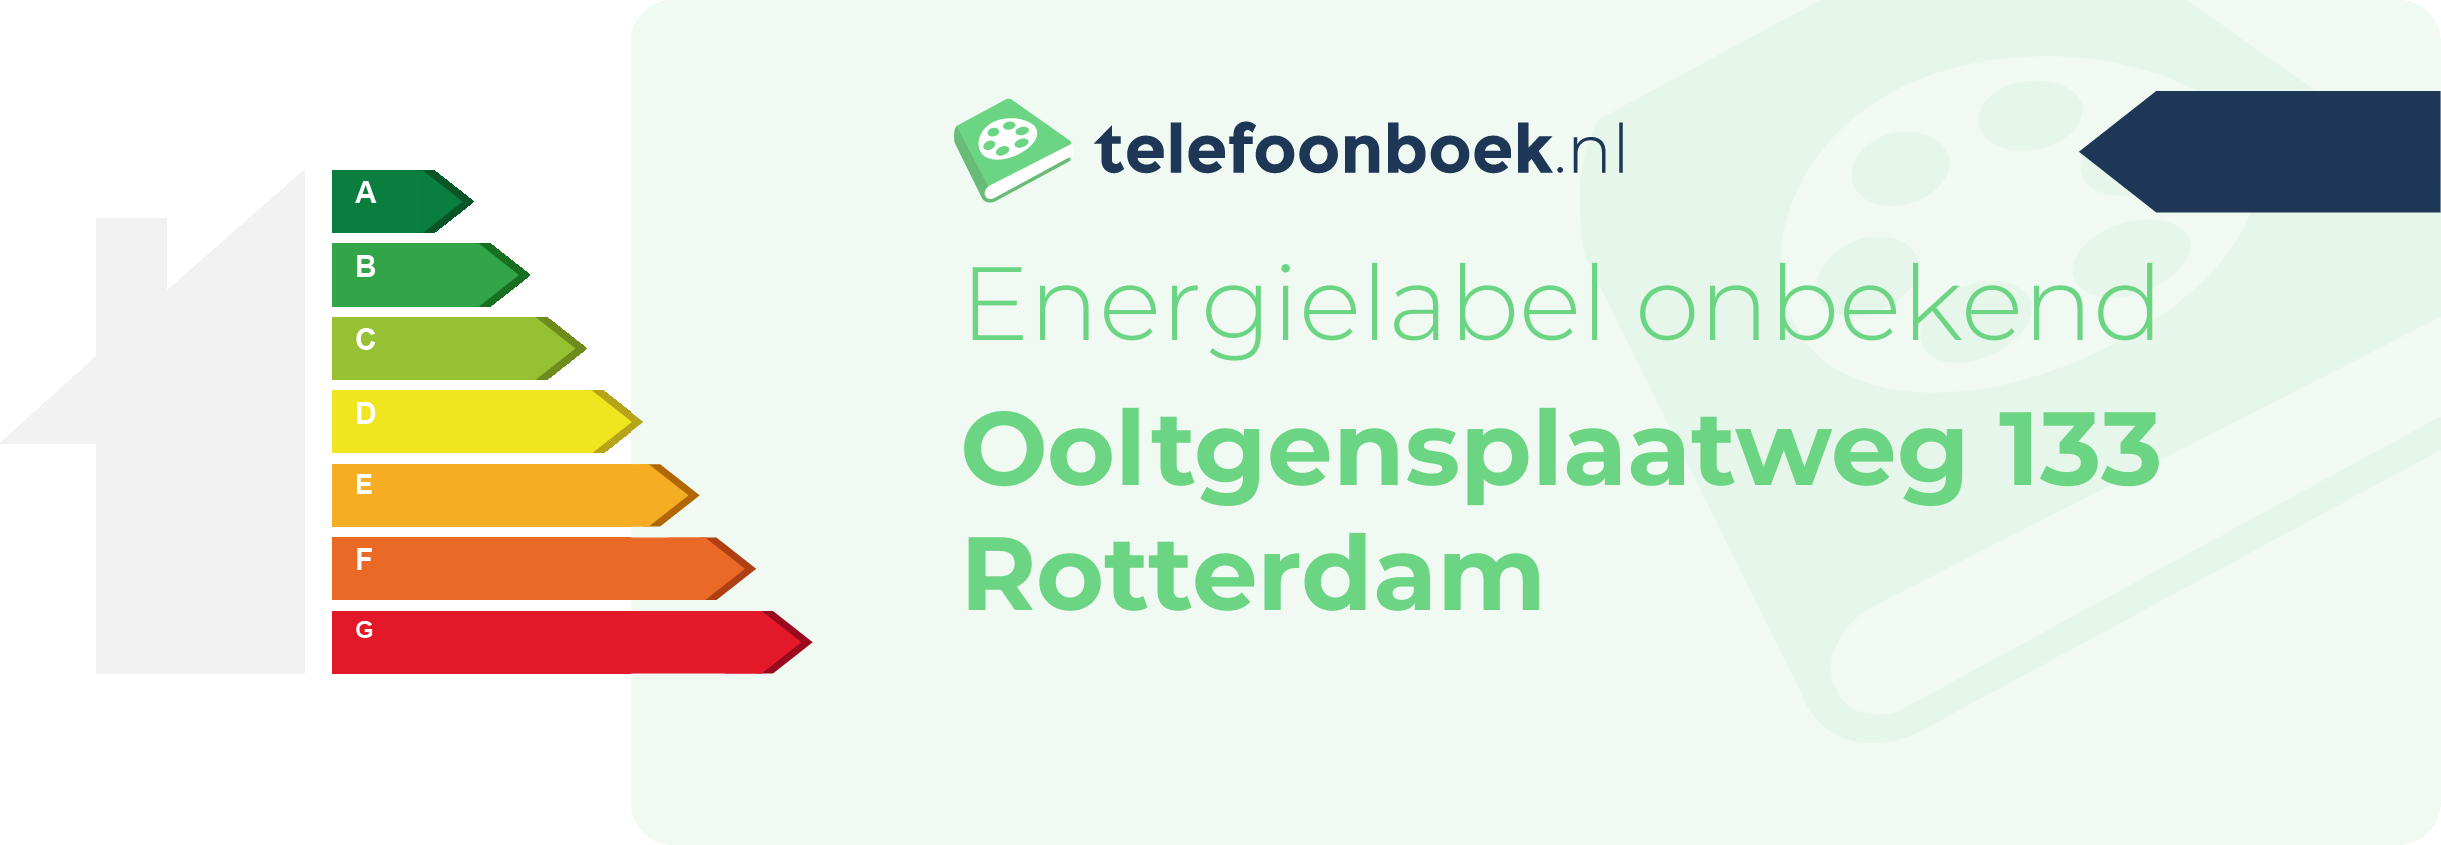 Energielabel Ooltgensplaatweg 133 Rotterdam